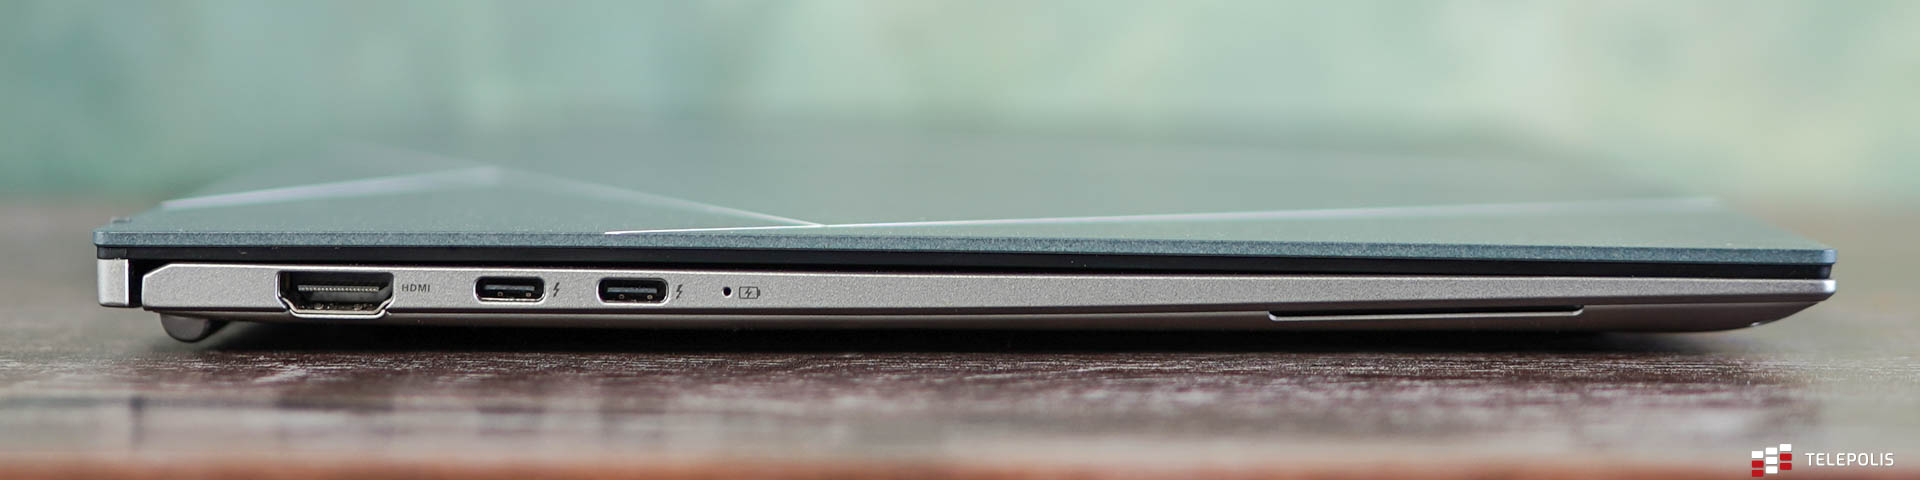 Asus Zenbook S 13 OLED lewy bok